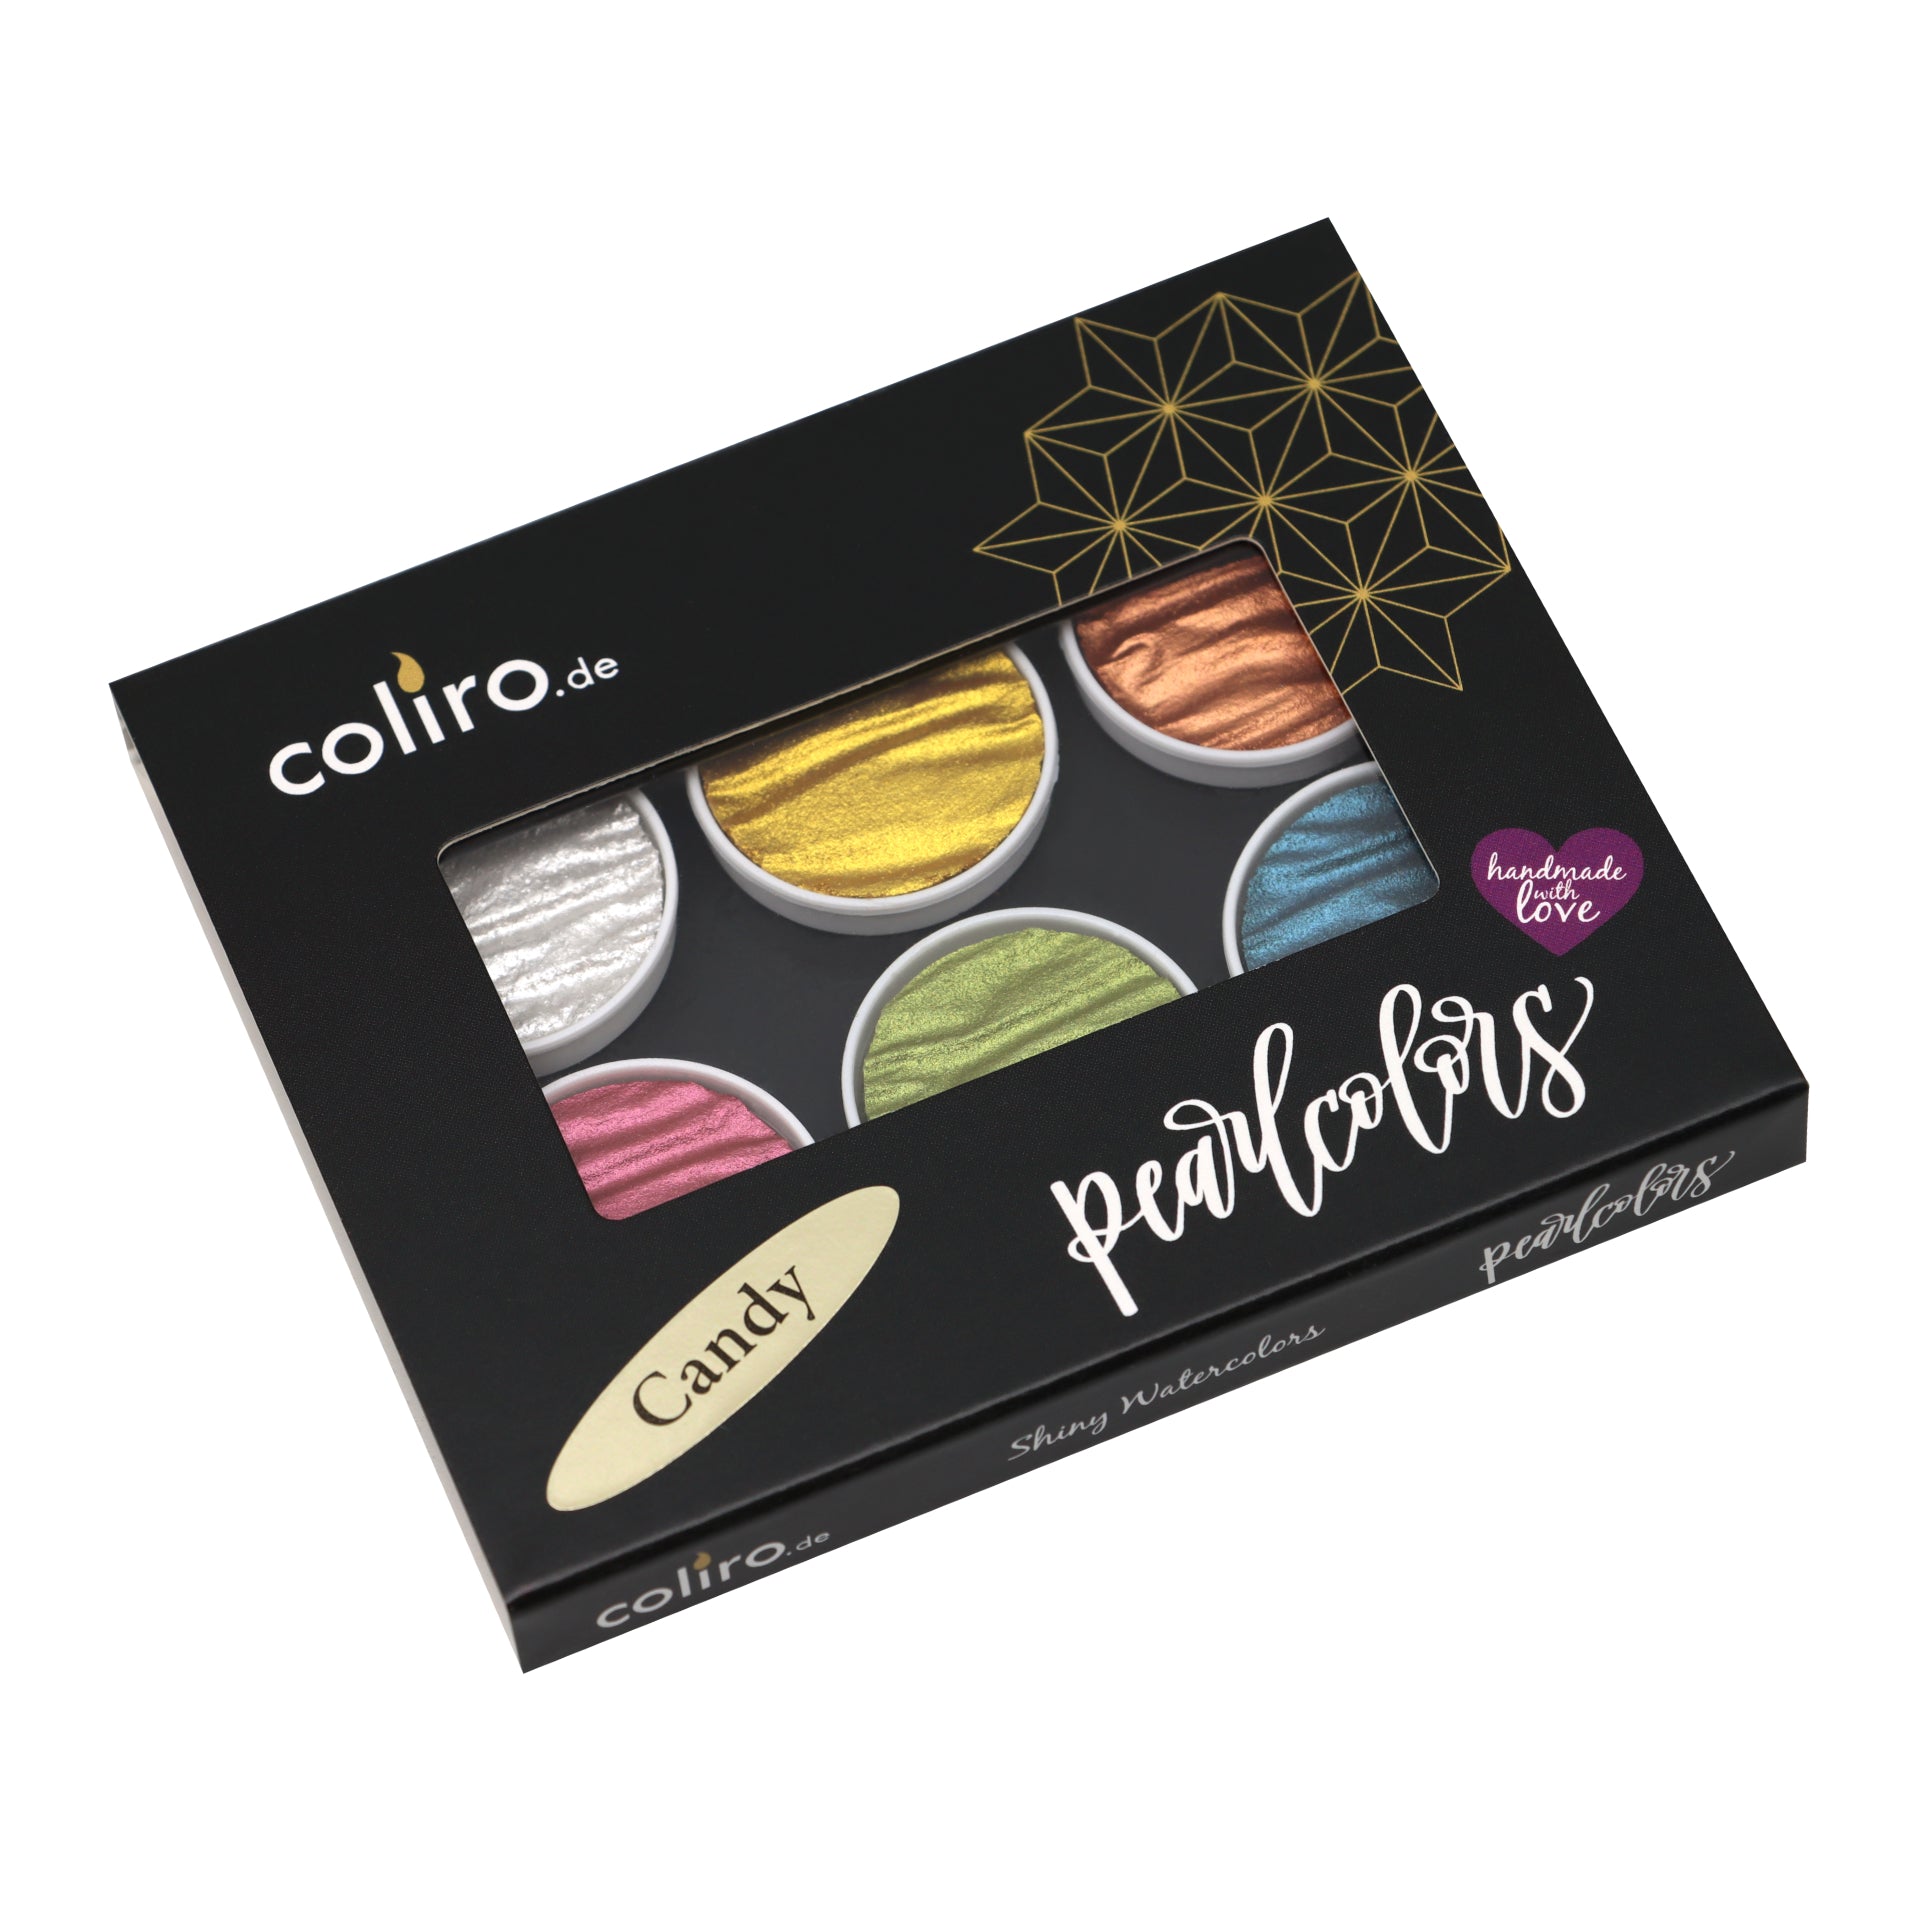 Coliro Pearlcolors 'Candy' set